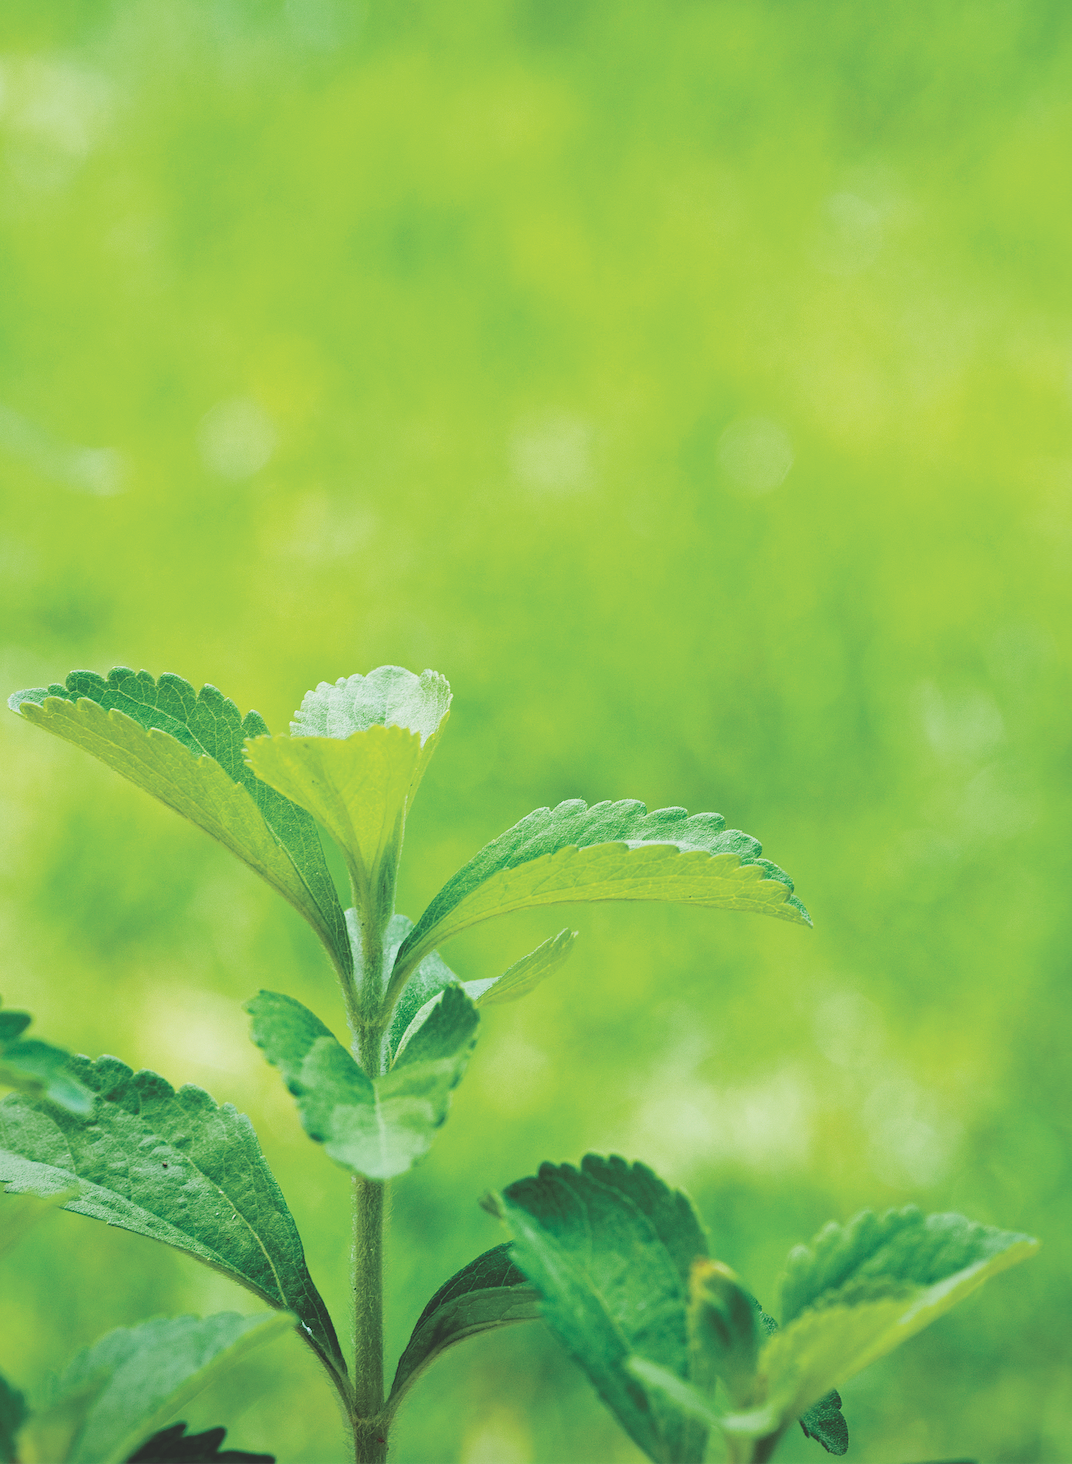 Stevia and Monk Fruit: What Makes a Natural Sweetener Natural?